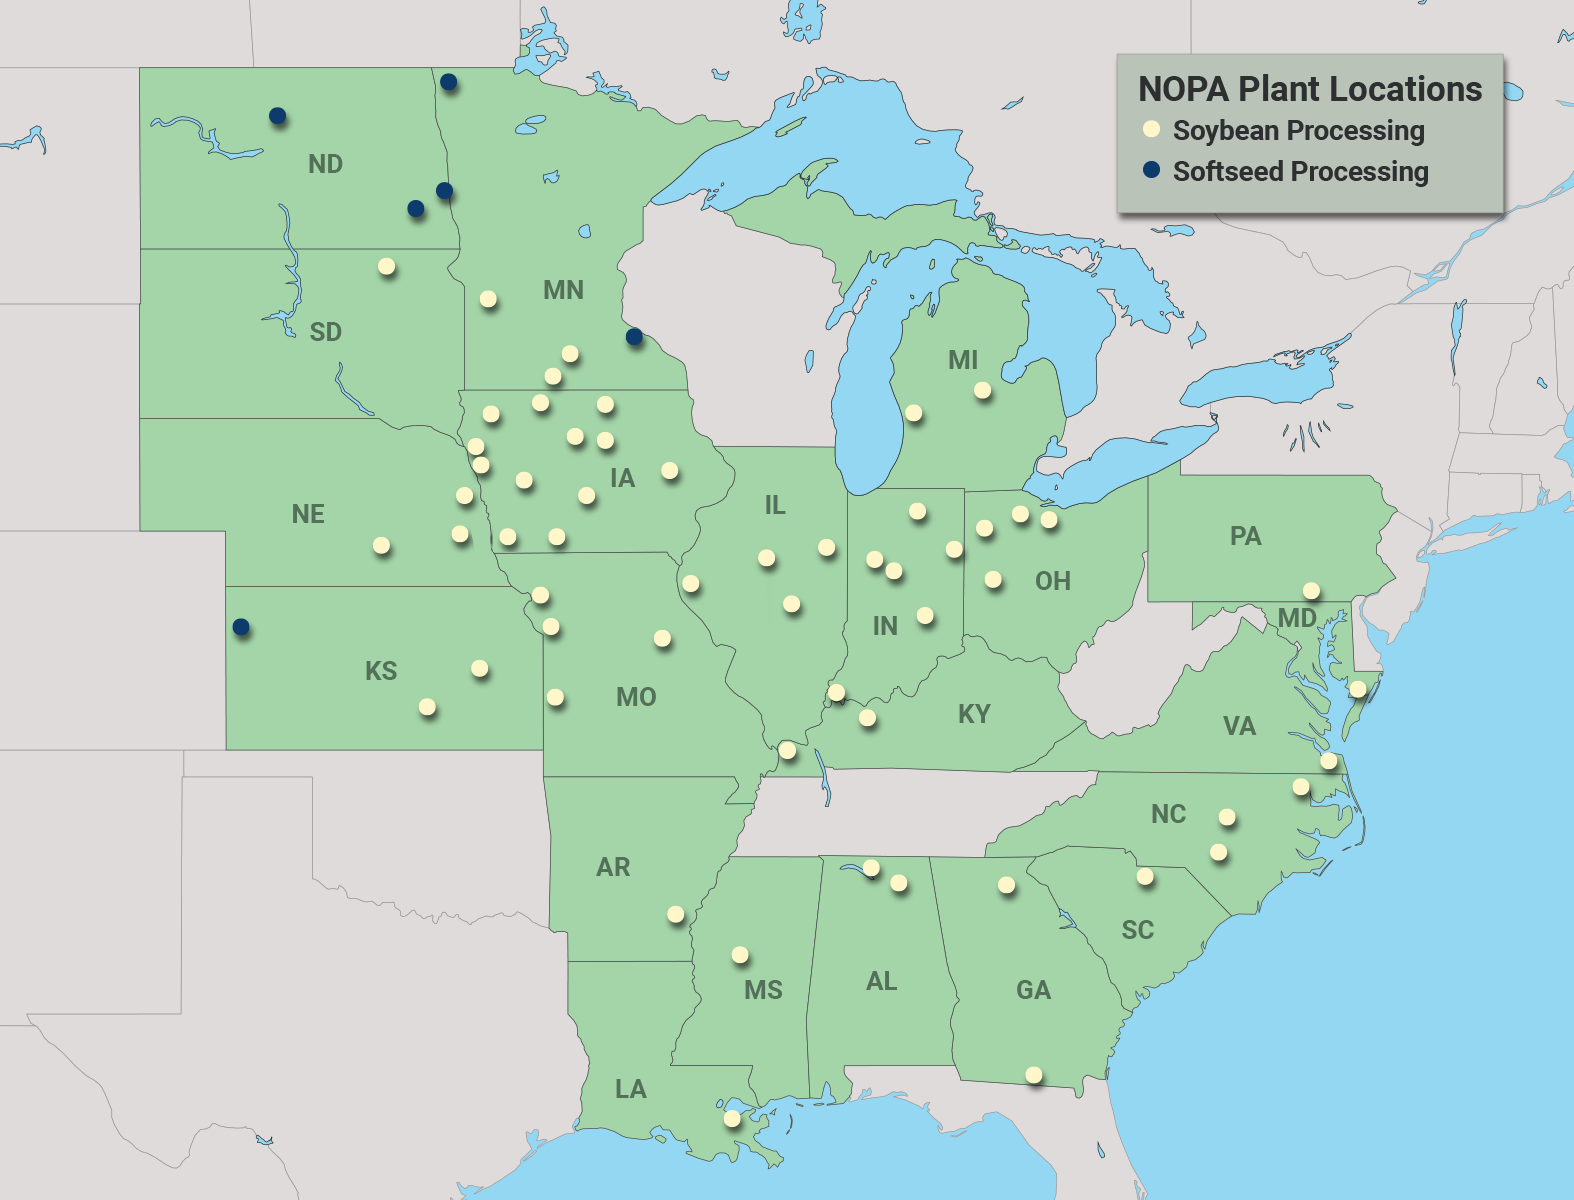 NOPA Plant Locations - NOPA